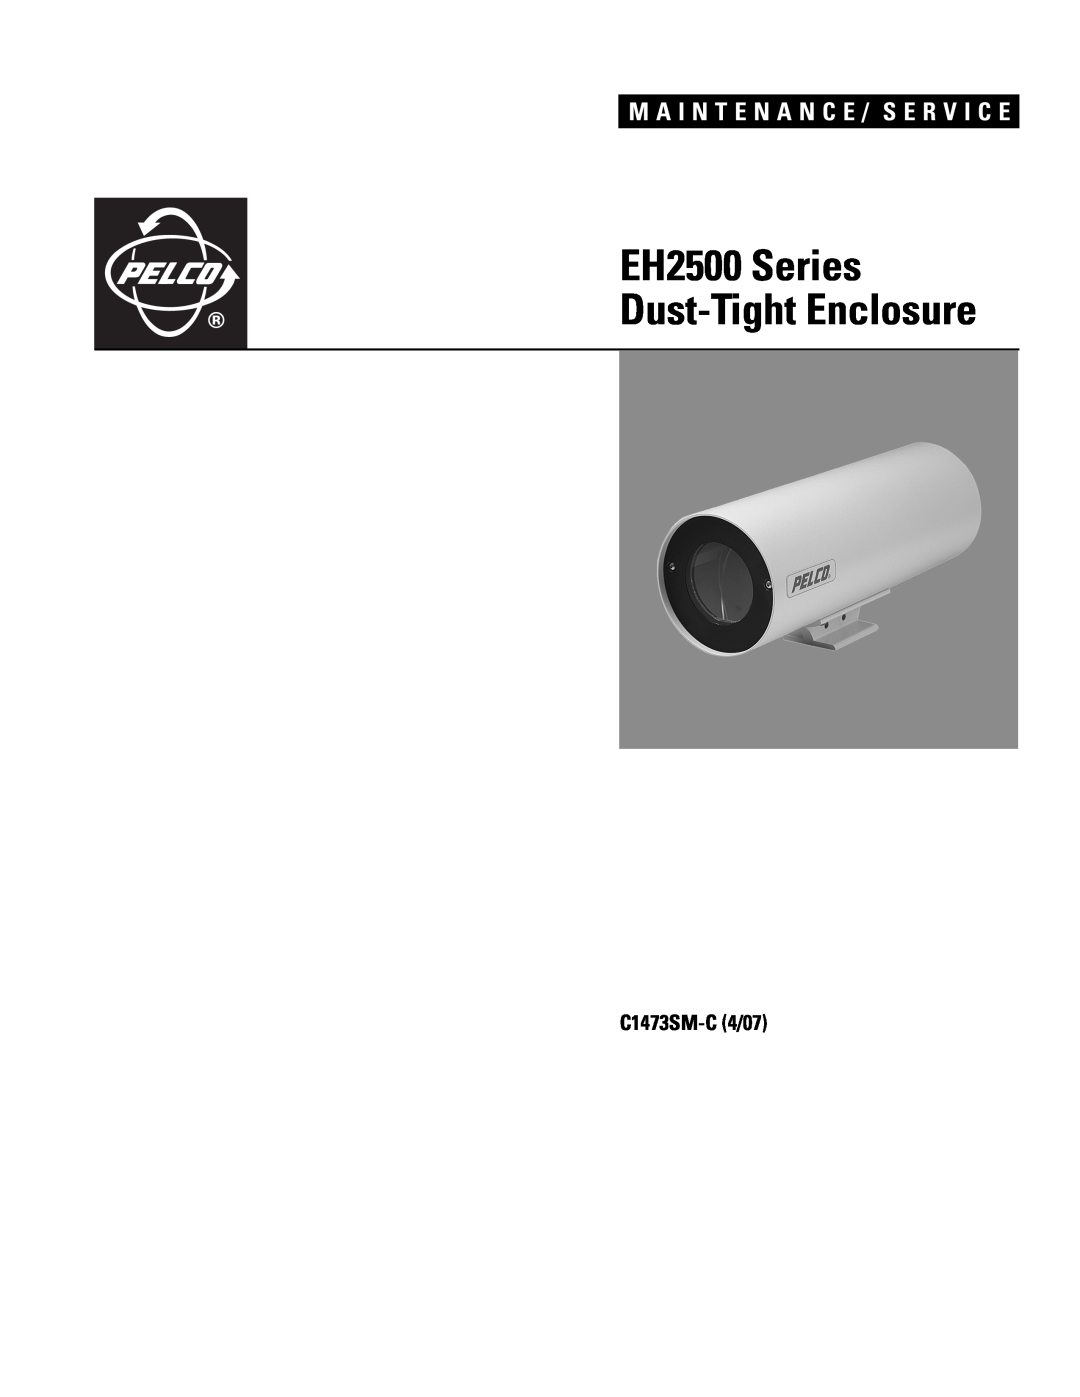 Pelco manual EH2500 Series Dust-TightEnclosure, M A I N T E N A N C E / S E R V I C E, C1473SM-C4/07 